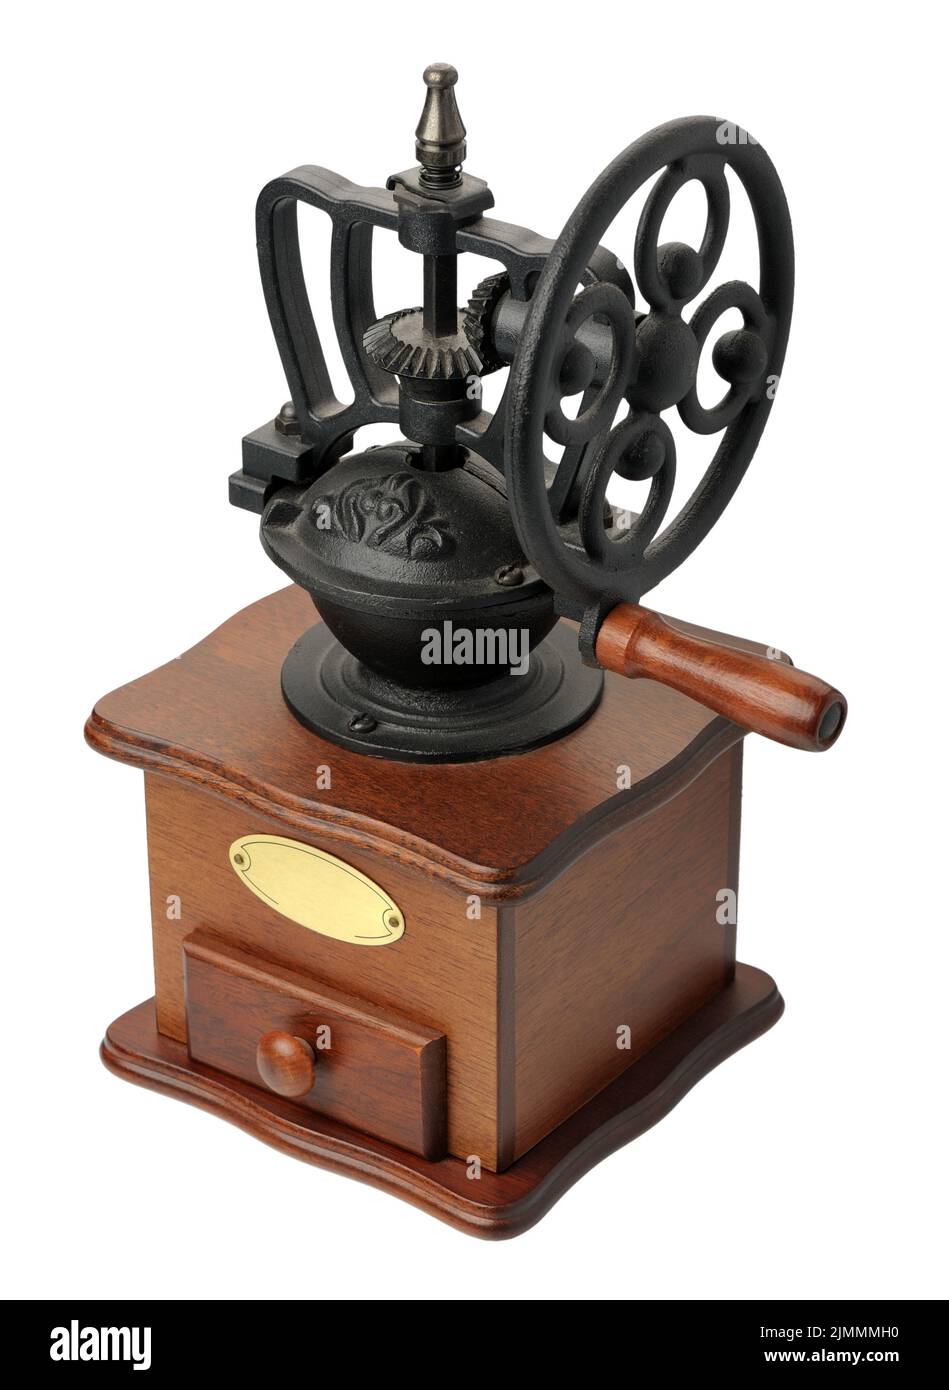 Manual coffee grinder Stock Photo